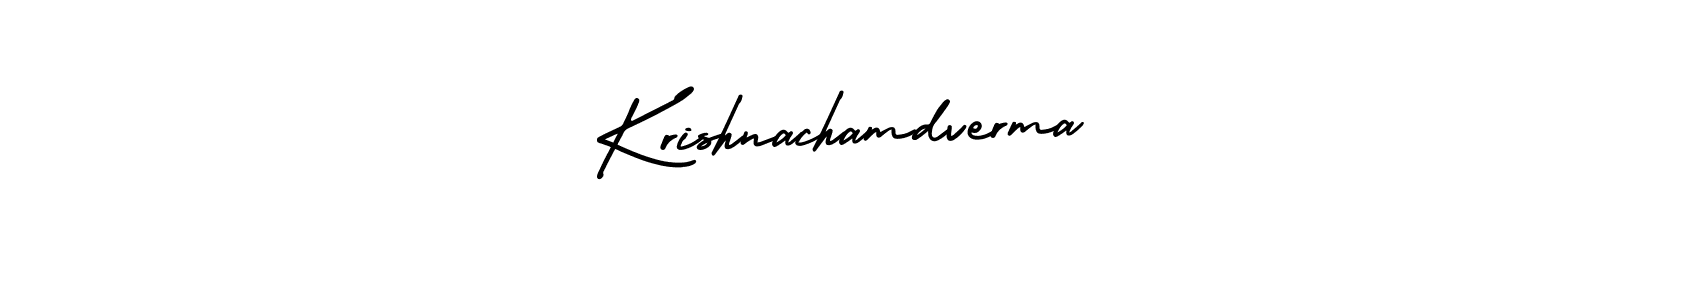 How to Draw Krishnachamdverma signature style? AmerikaSignatureDemo-Regular is a latest design signature styles for name Krishnachamdverma. Krishnachamdverma signature style 3 images and pictures png